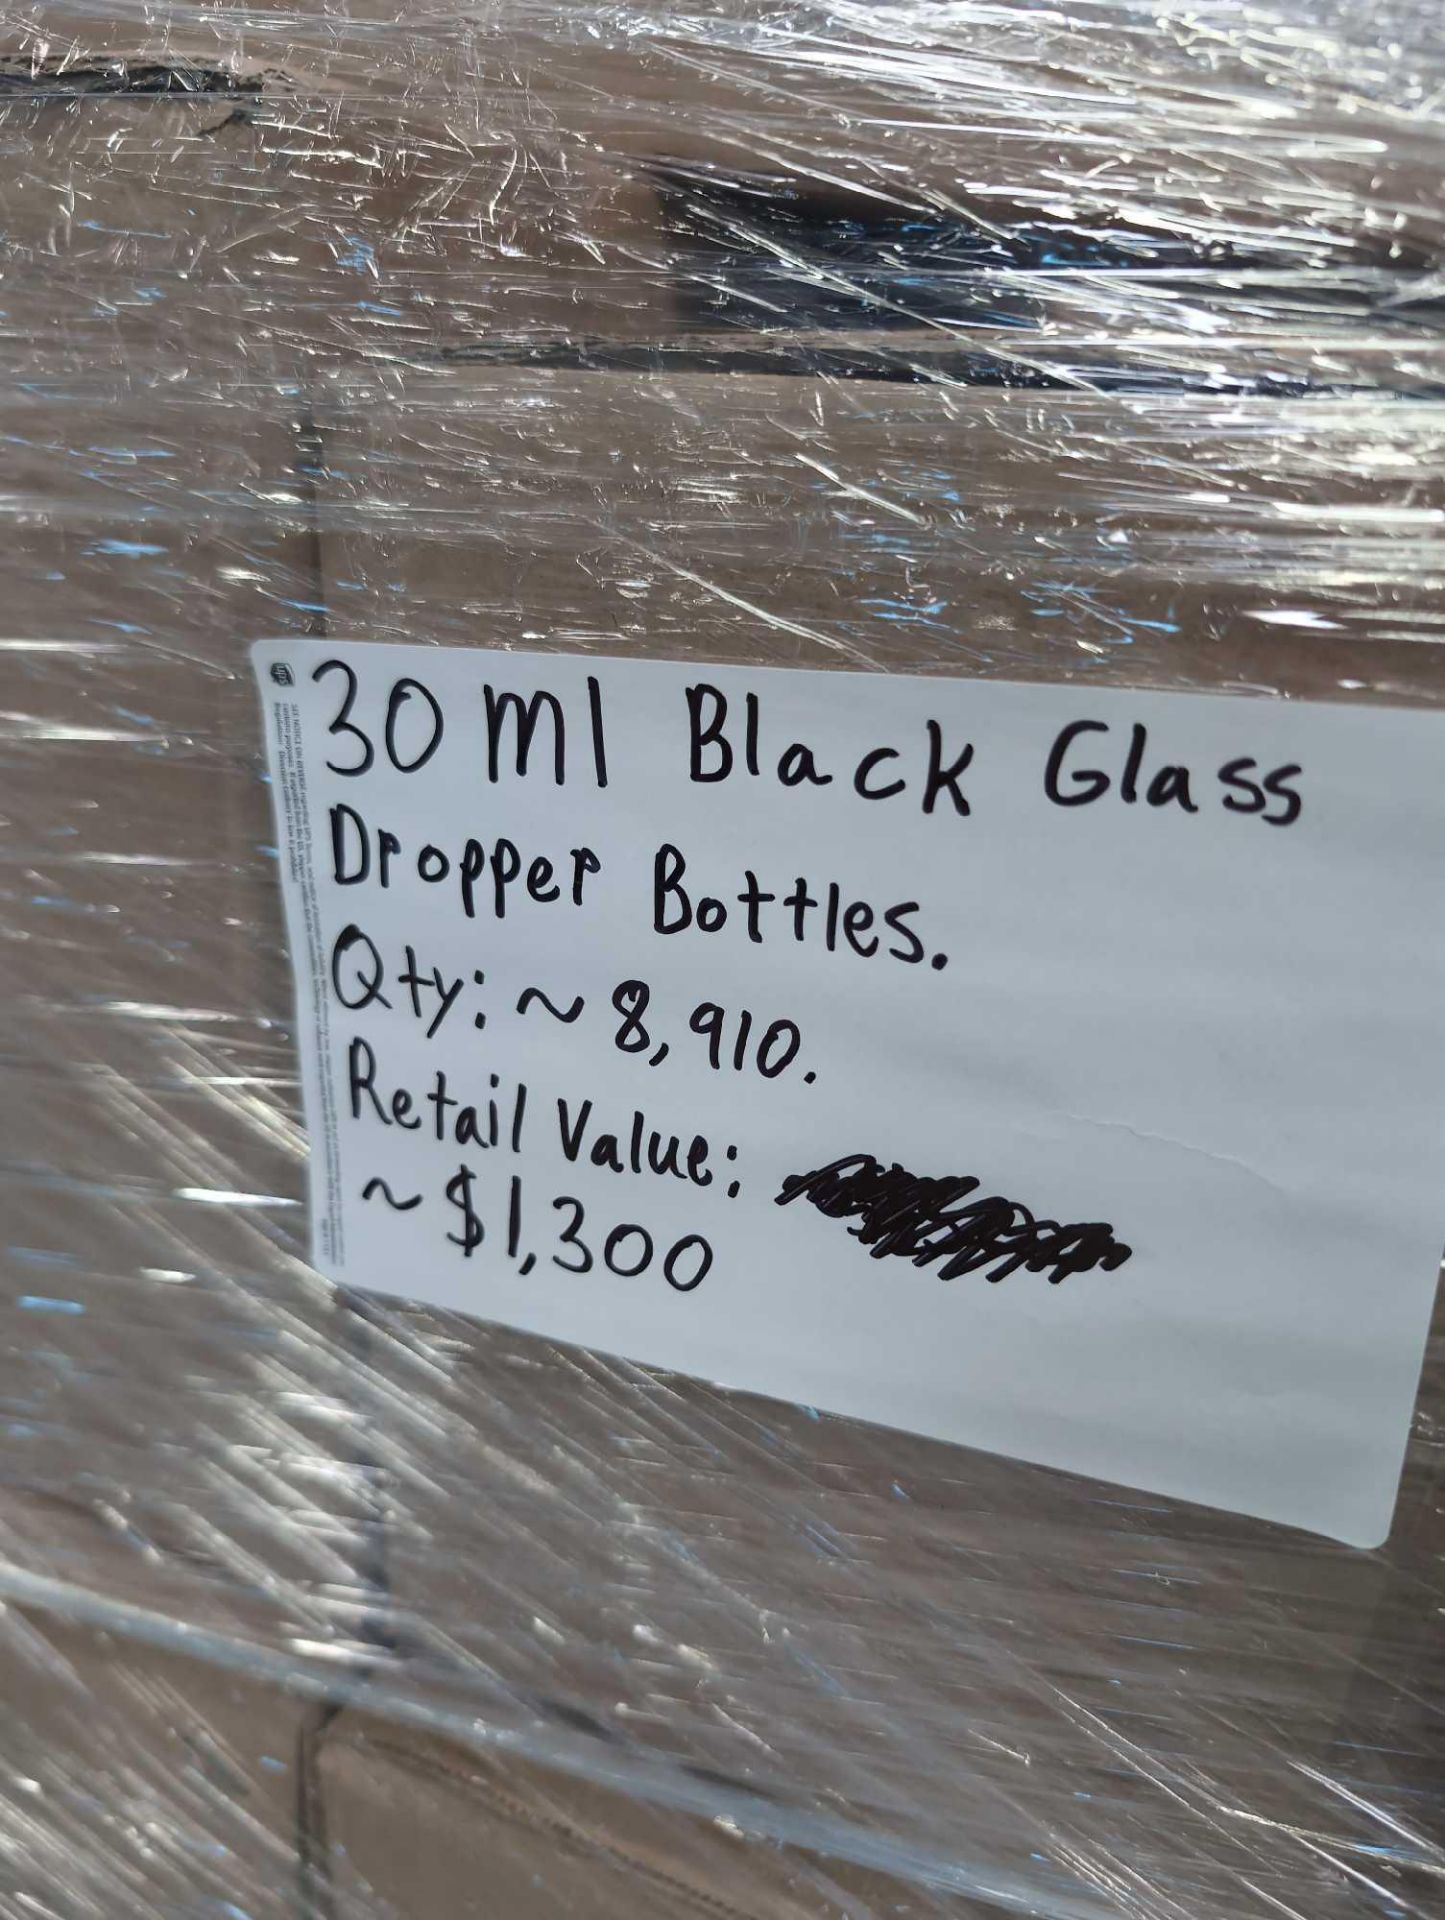 30 ML Black Glass Dropper Bottles 8910 QTY, Retail Value $1,300 - Image 10 of 11